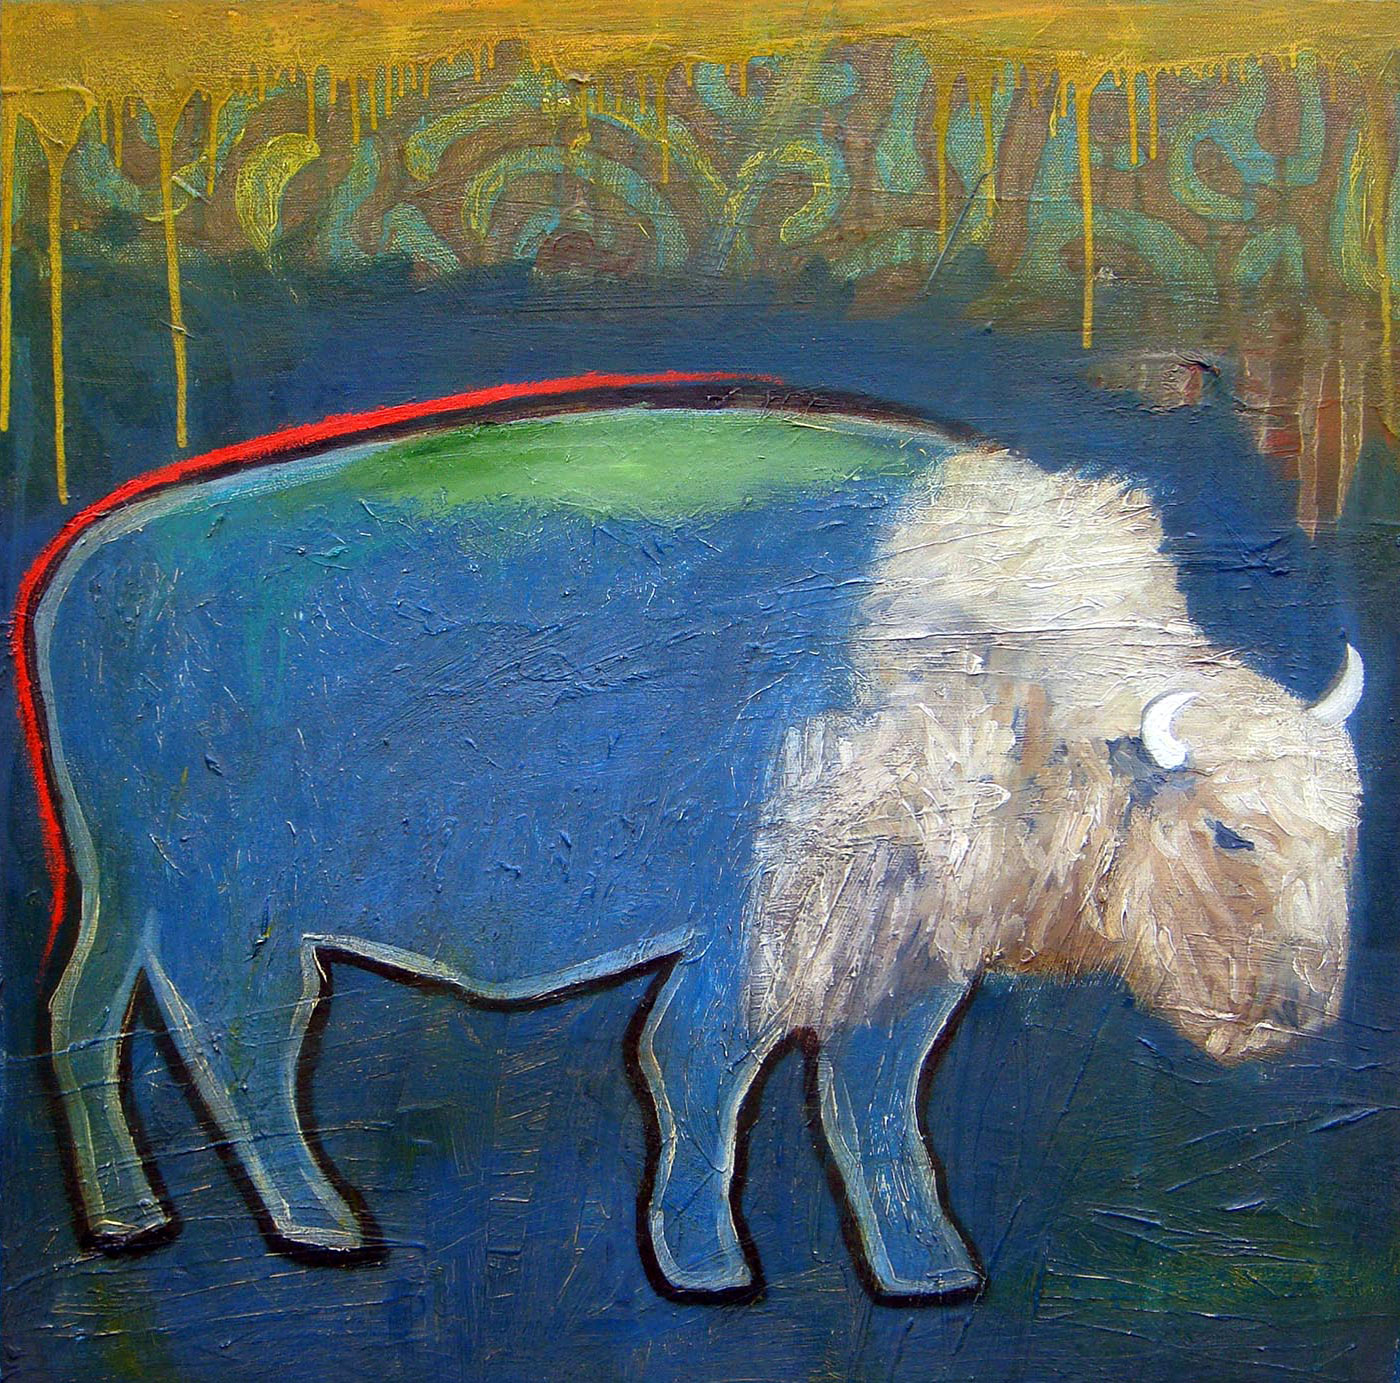  White Buffalo  Oil on canvas  18" x 18"  AVAILABLE  $650 